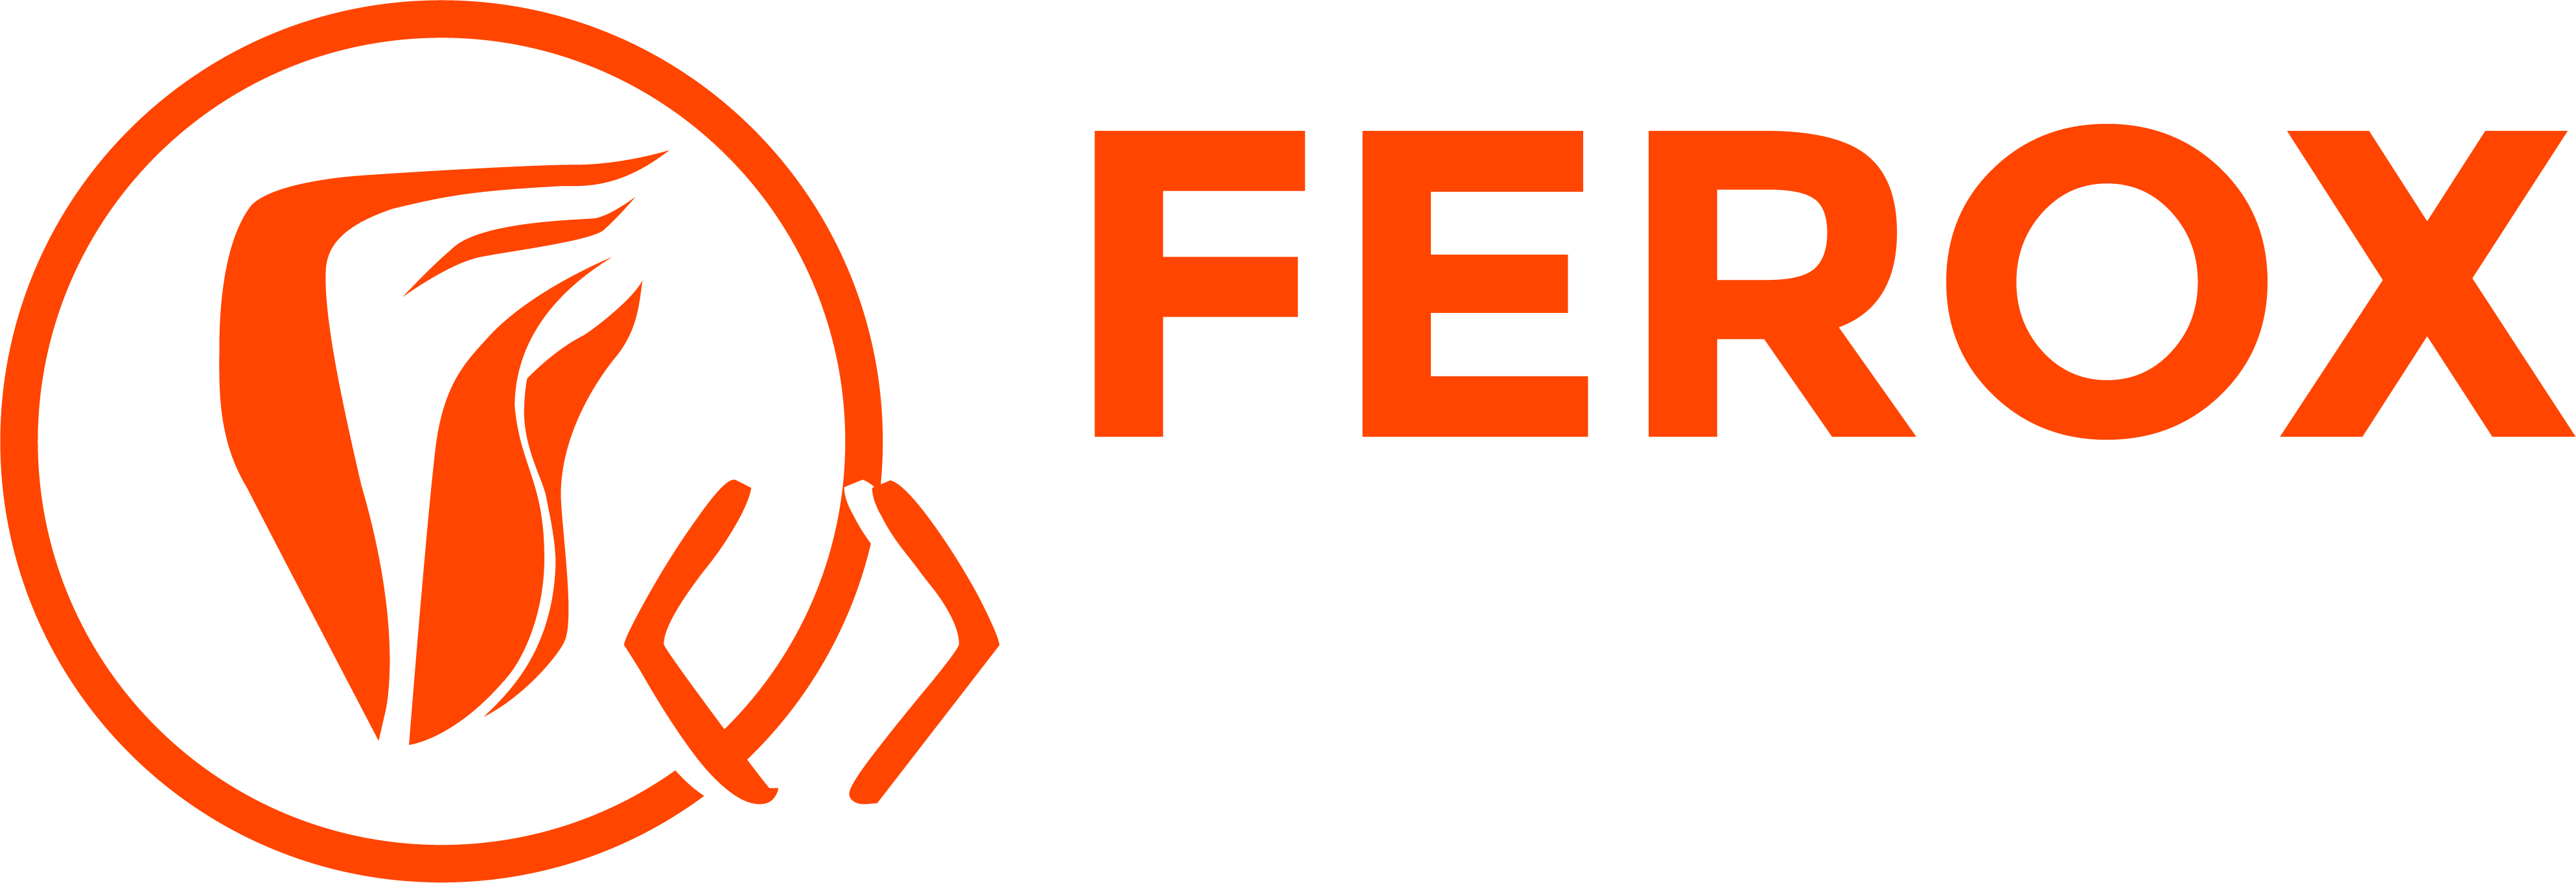 Ferox Codes